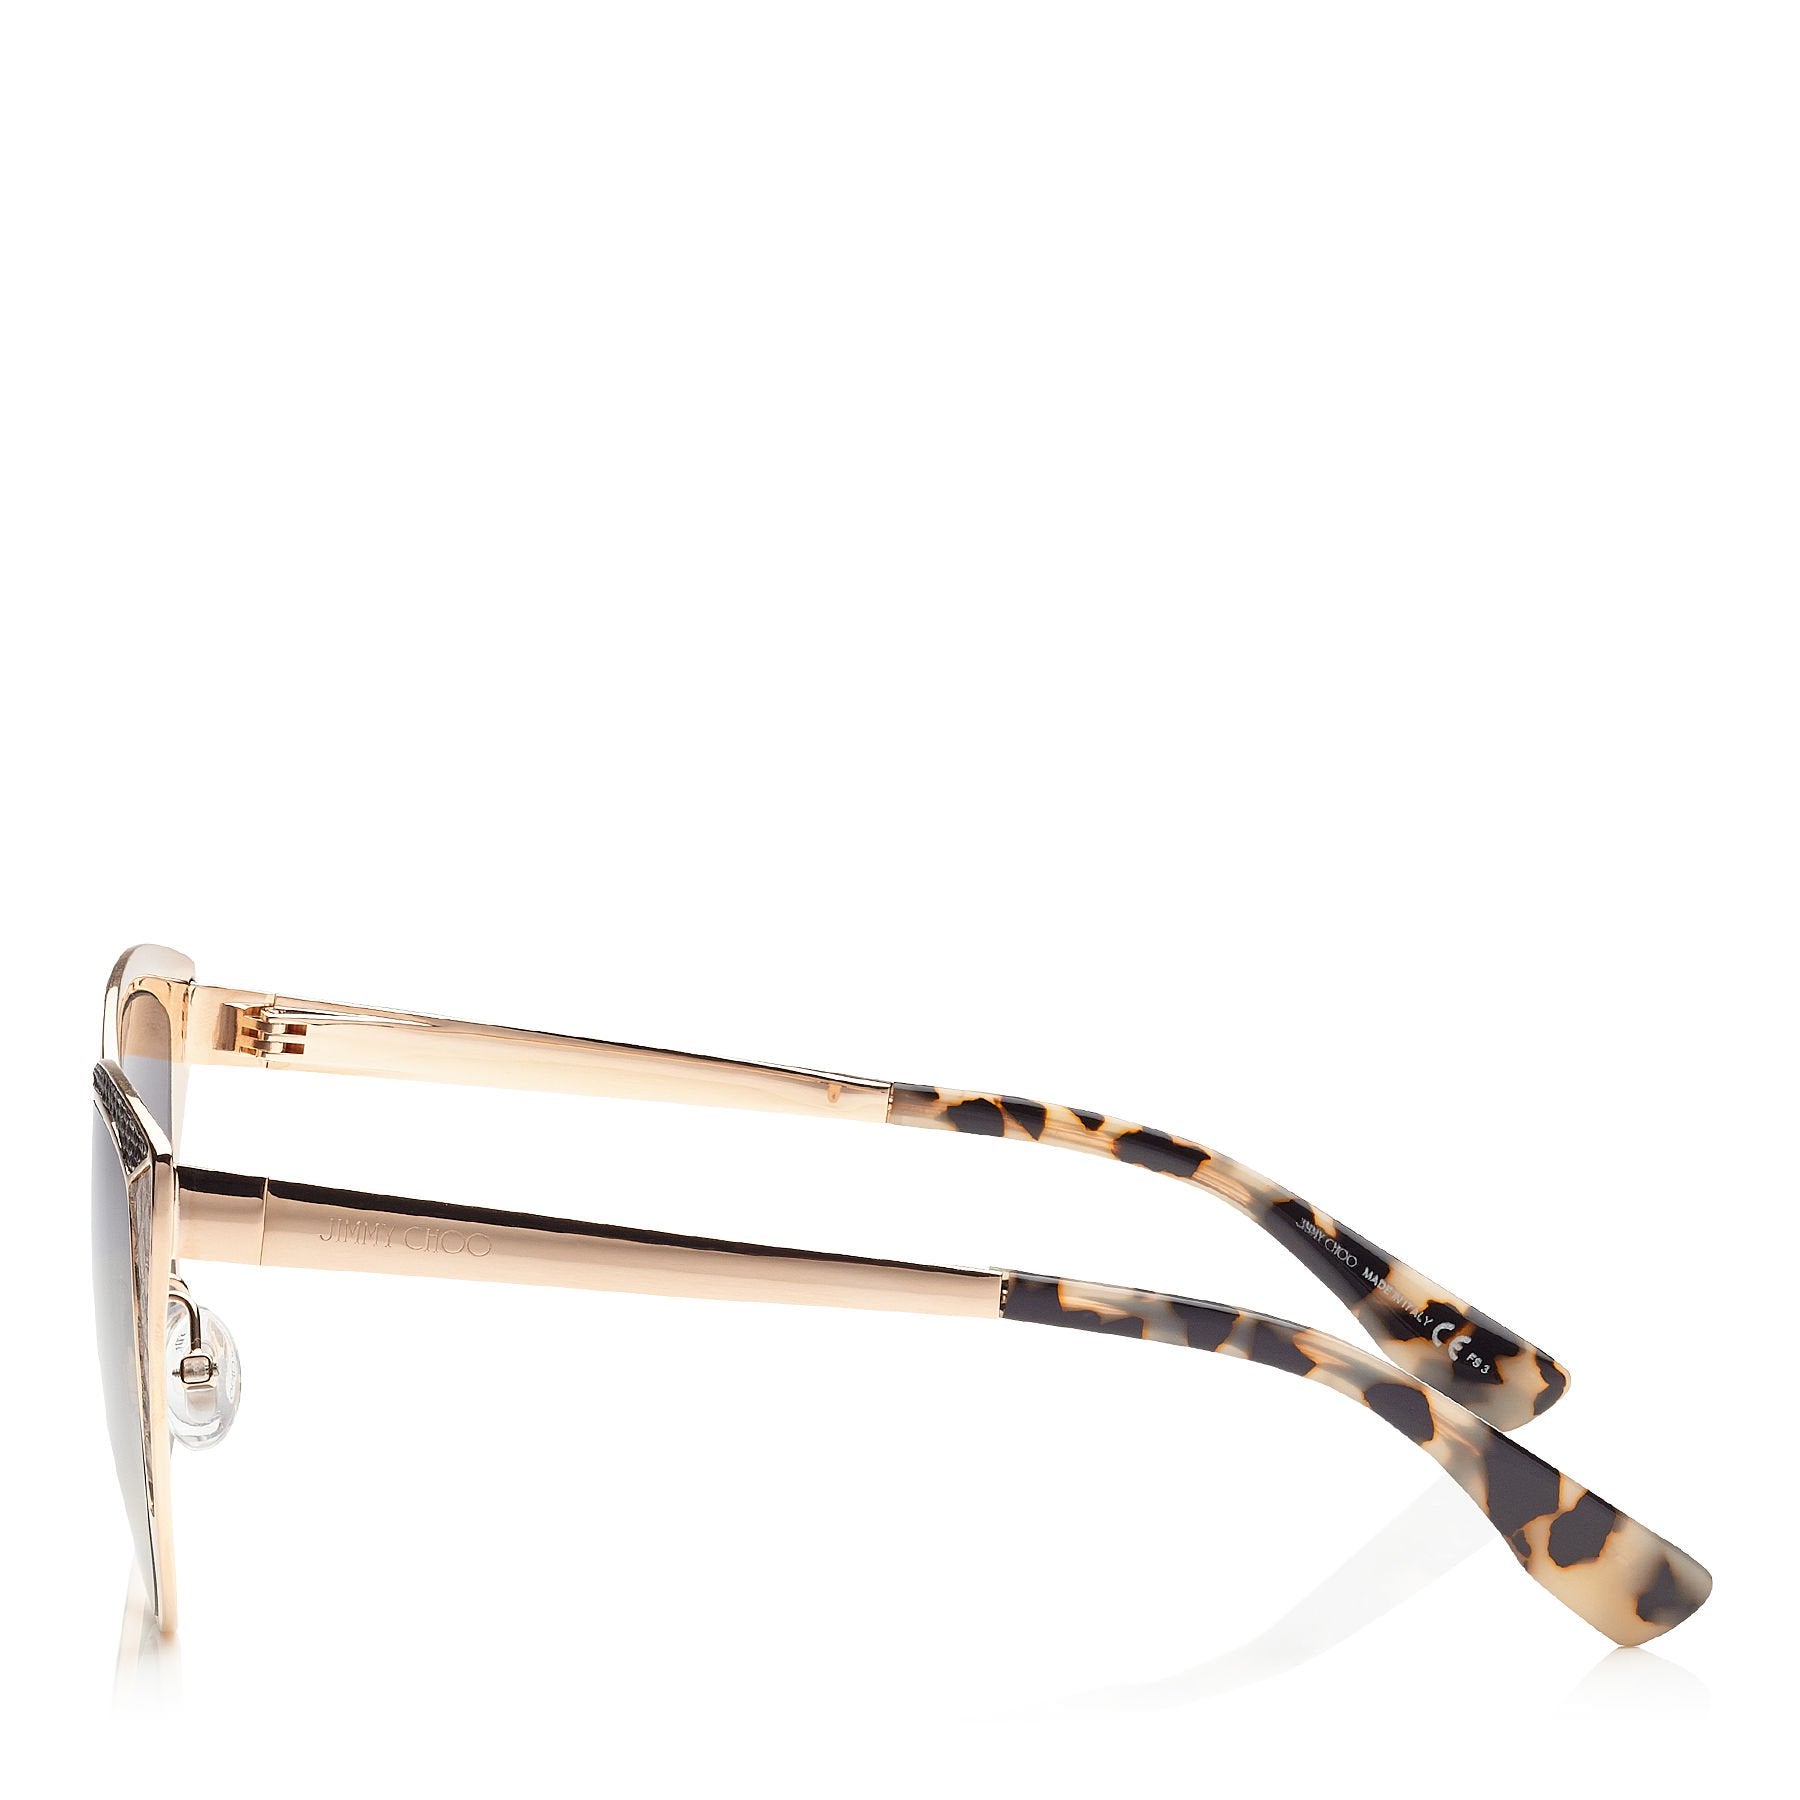 JIMMY CHOO Domi Metal Framed Cat Eye Sunglasses with Snakeskin Leather Detail ITEM NO. DOMIS56EPSW